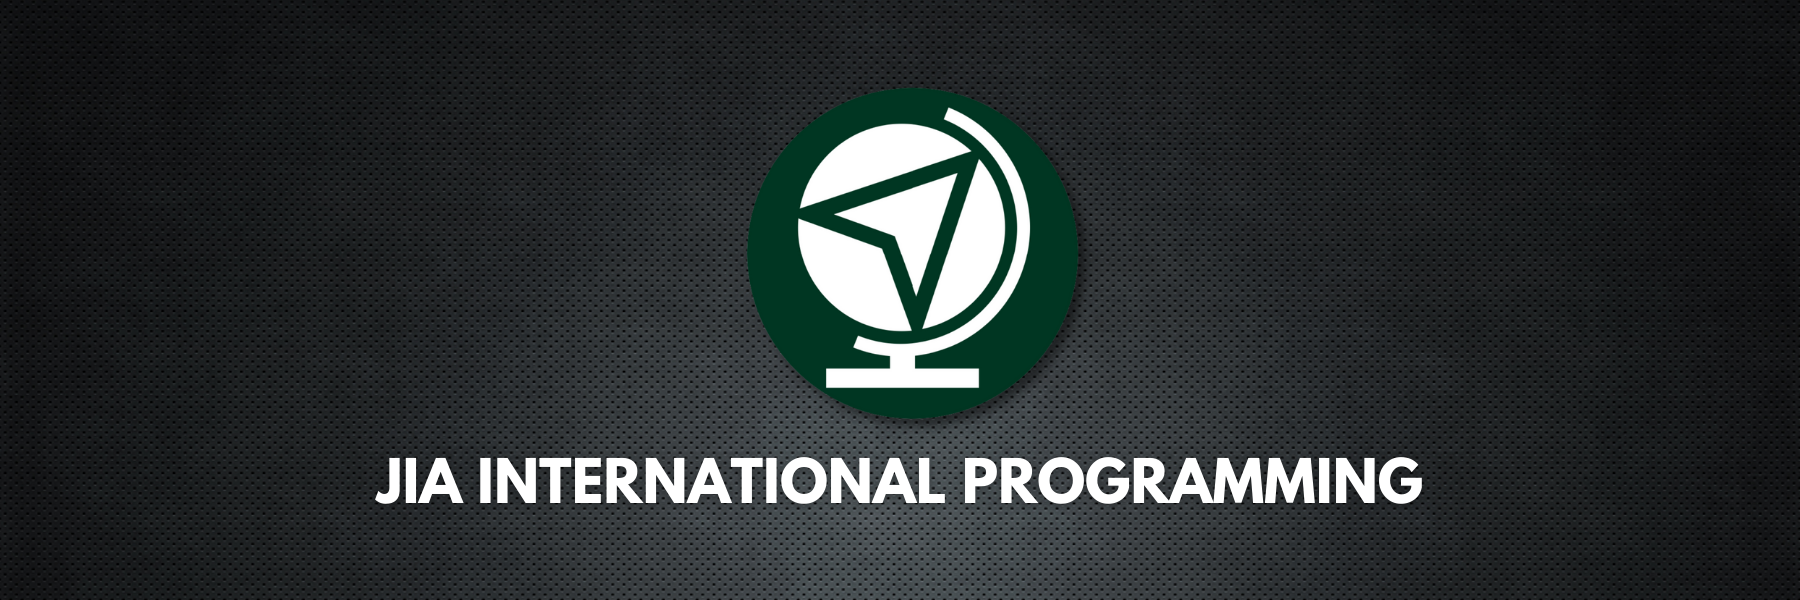 JIA International Programming